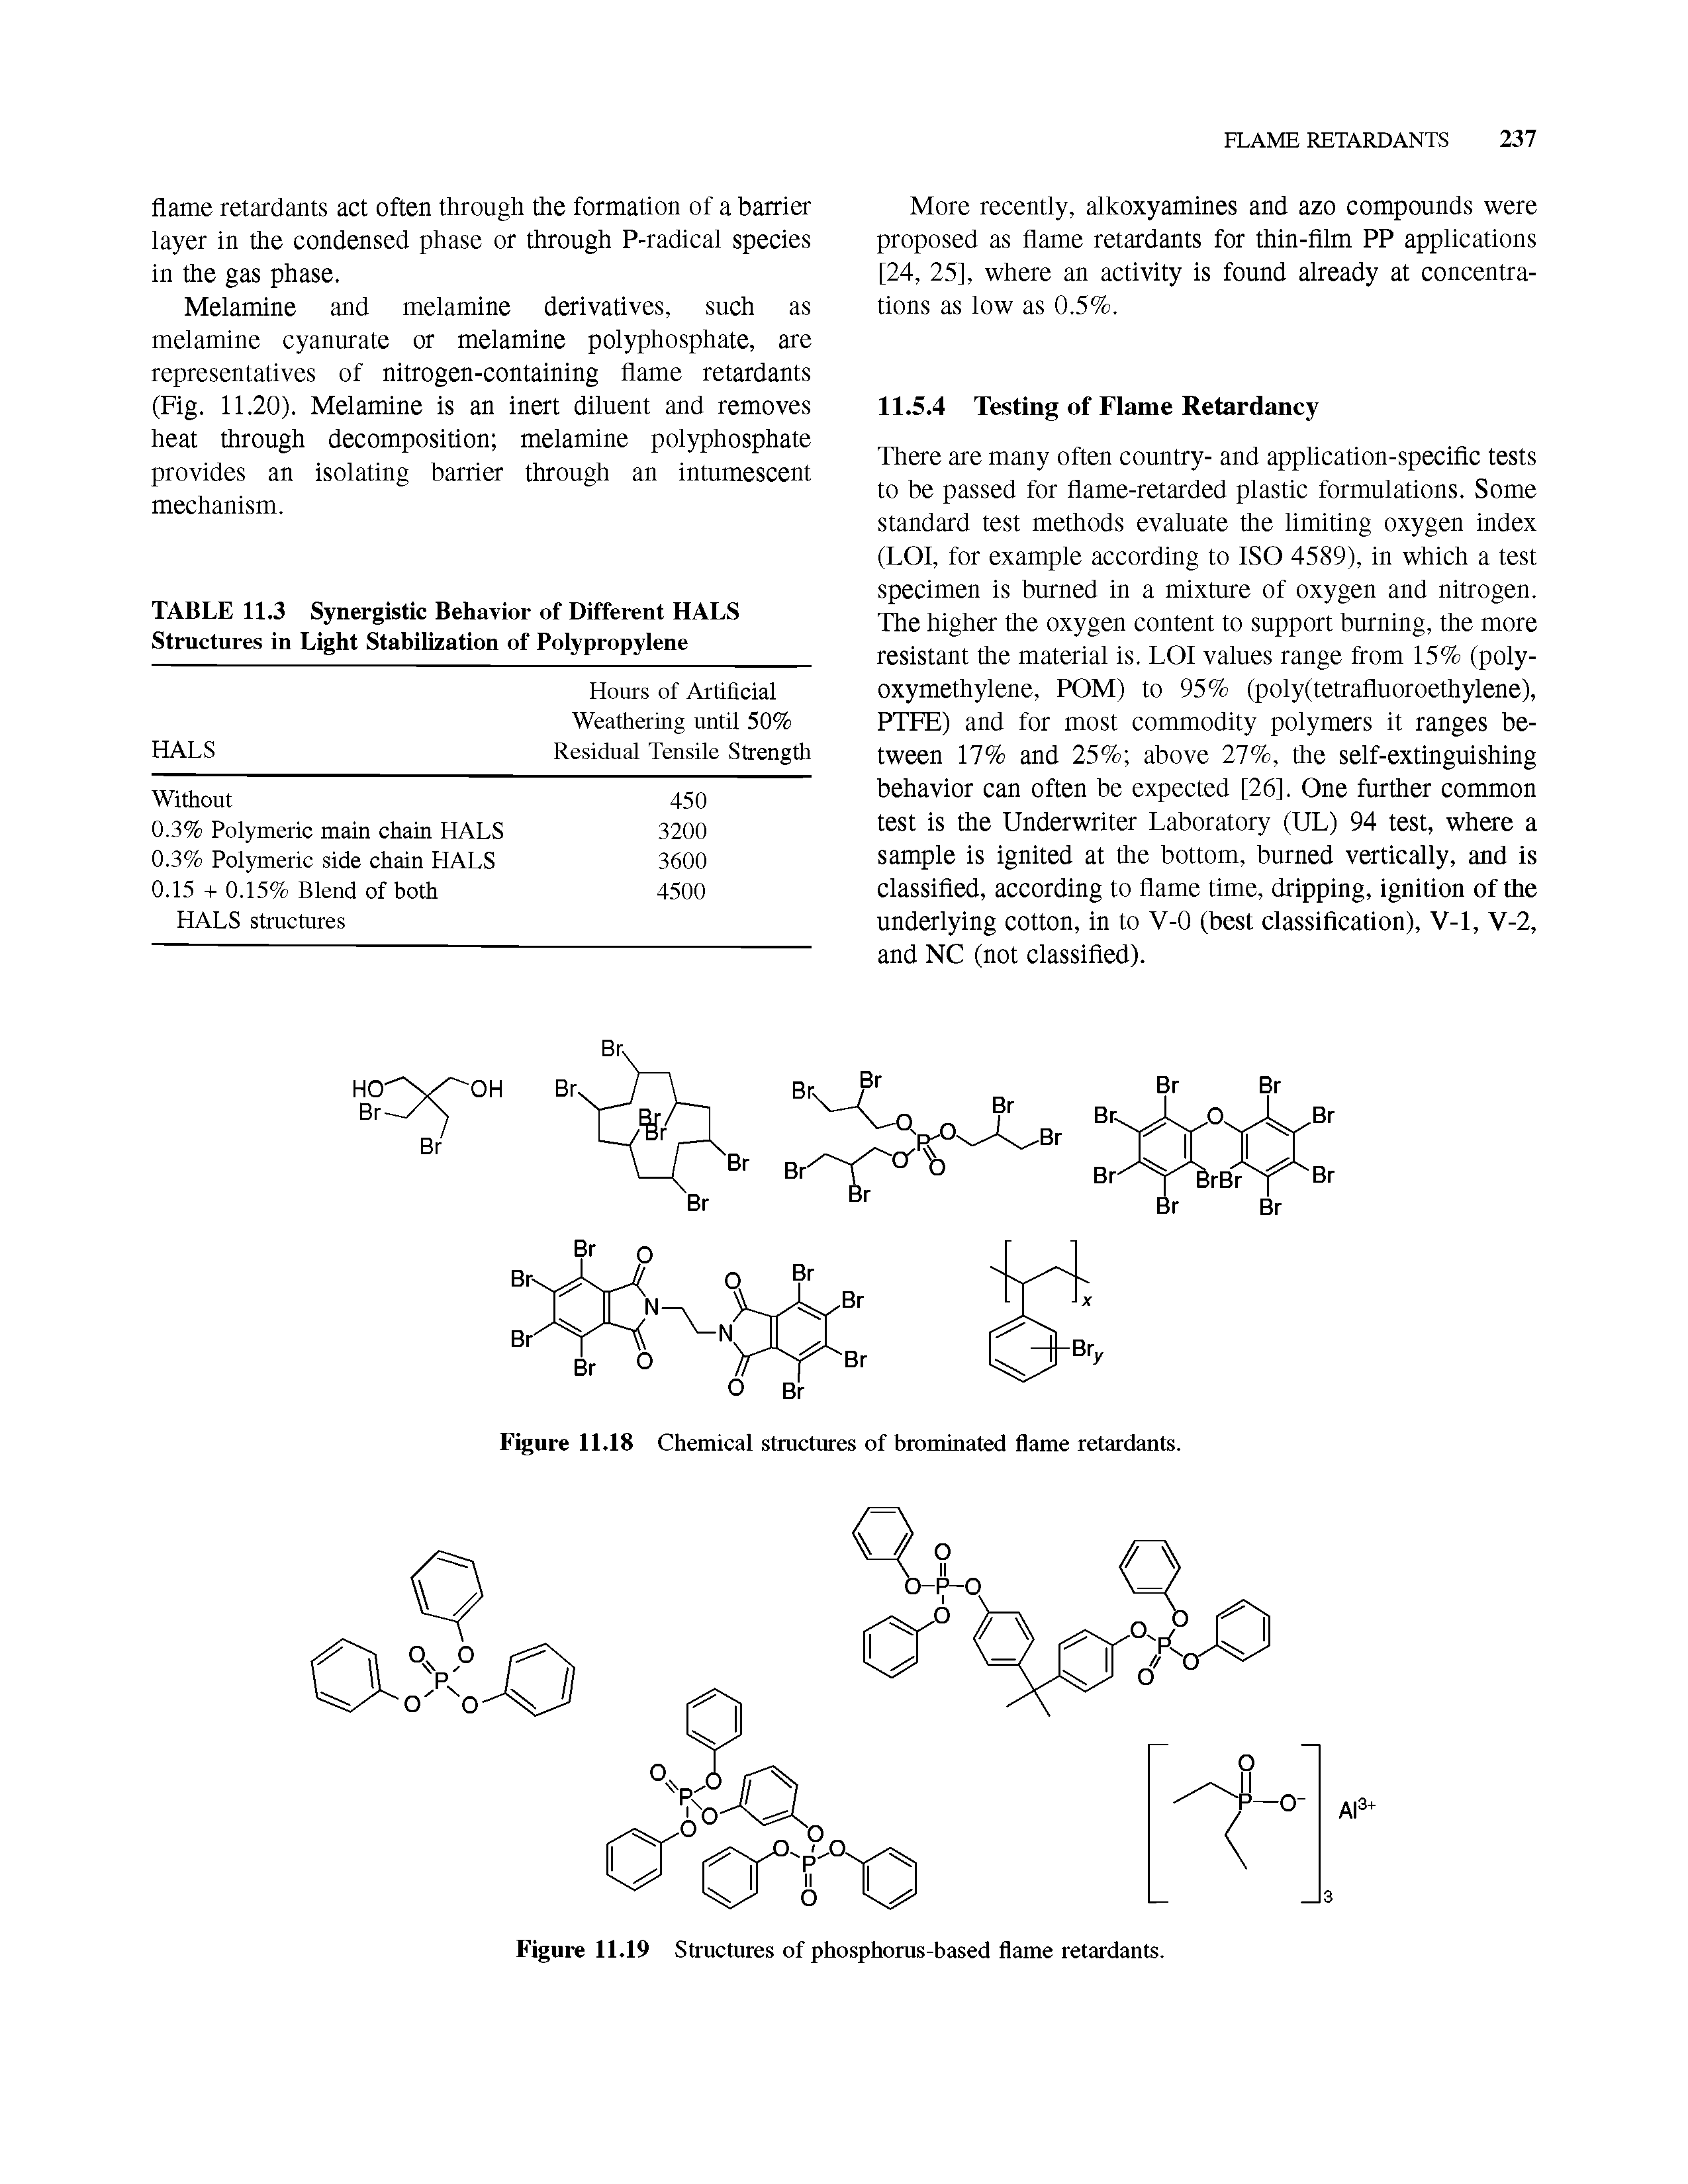 Figure 11.19 Structures of phosphorus-based flame retardants.